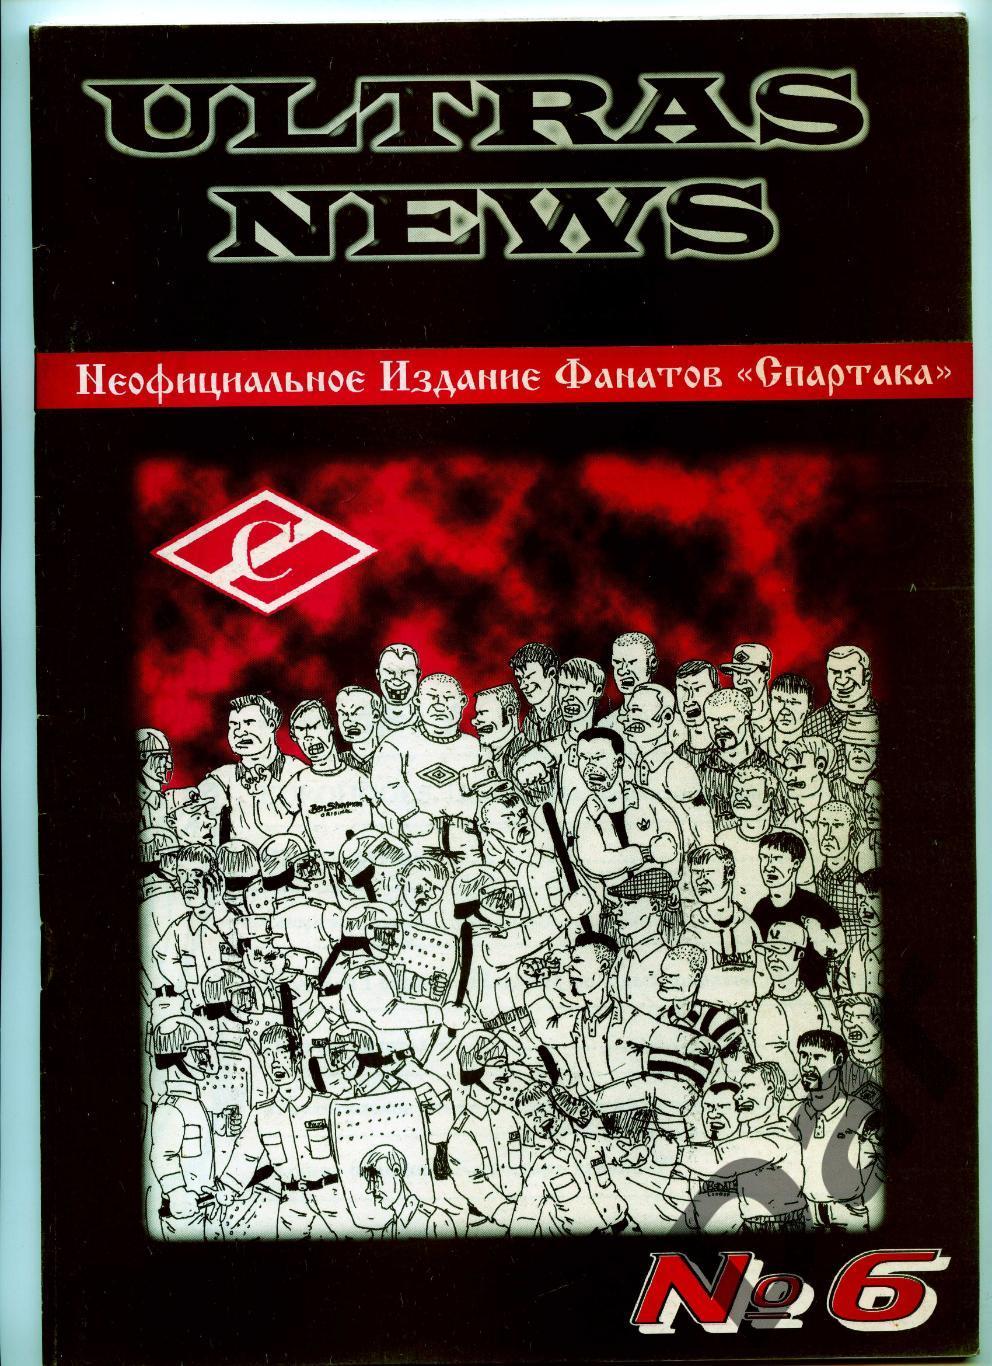 Фанзин ULTRAS NEWS #6 (Спартак Москва)